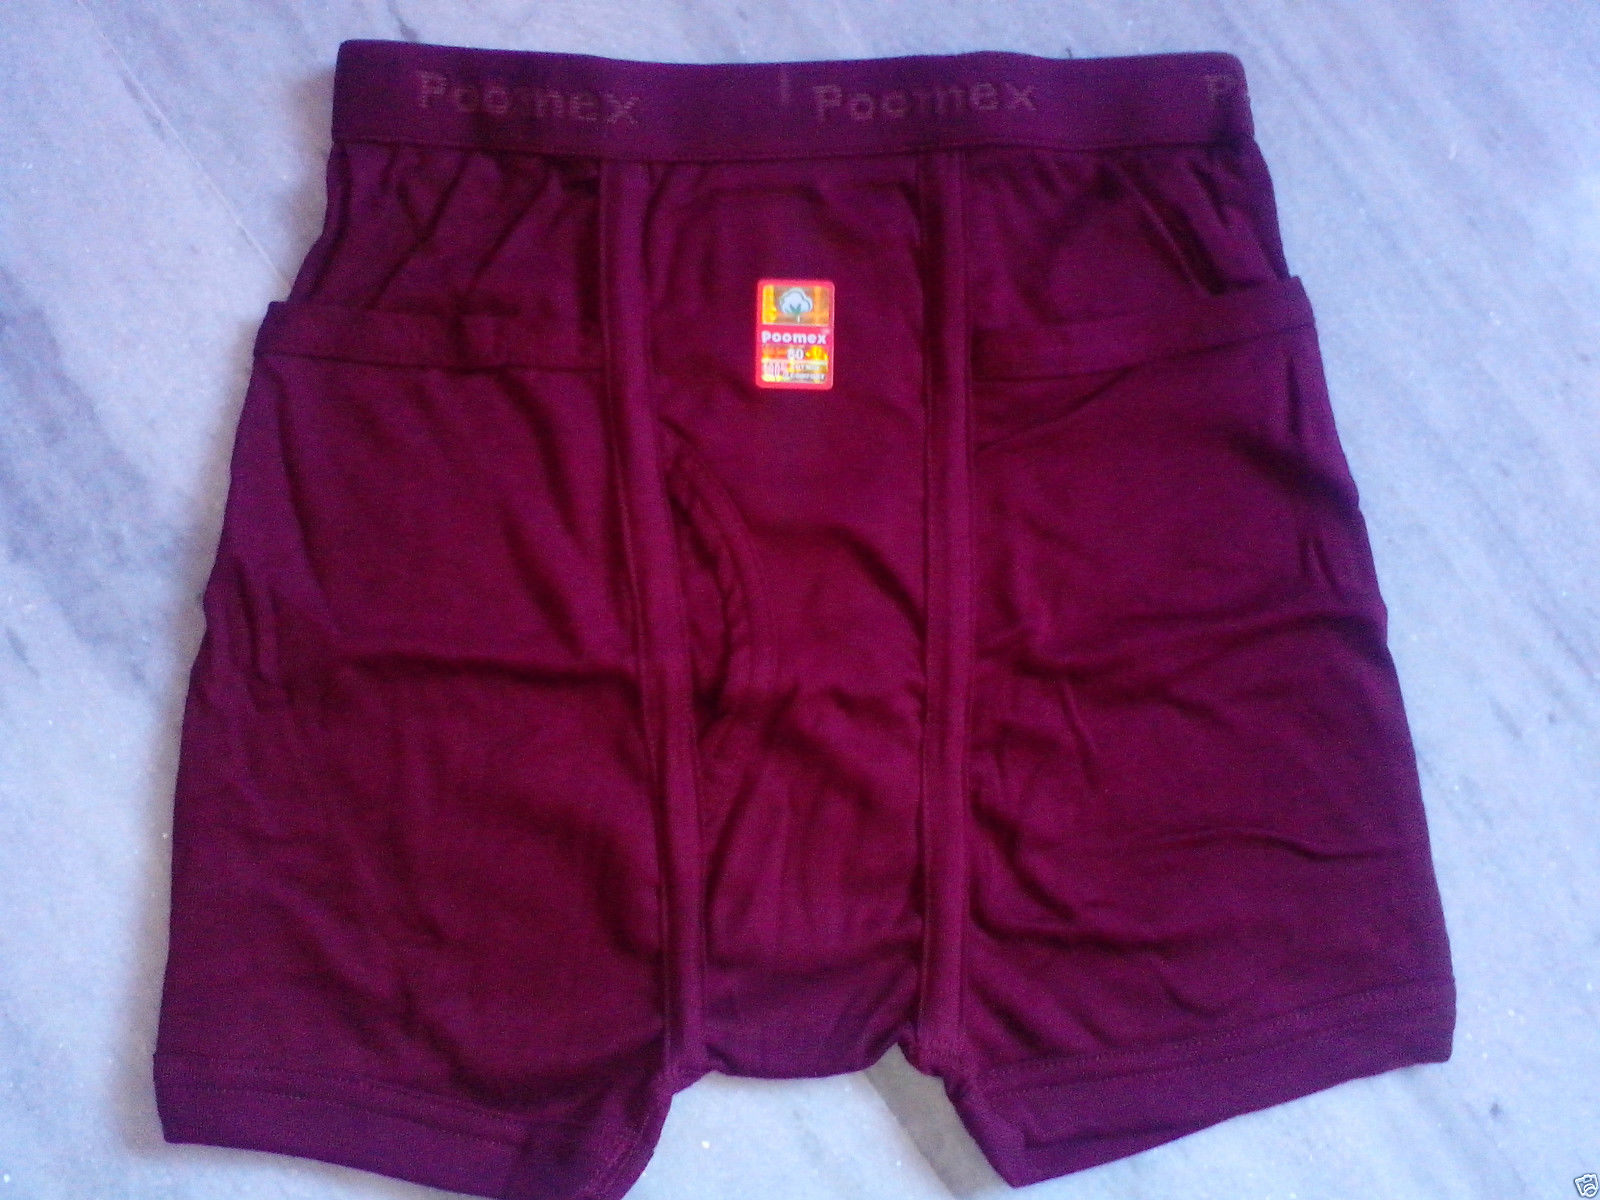 Poomex Pocket Trunk for Boys & Men's/Innerwear/Underwear-(Pack of 3,Random  Colours)